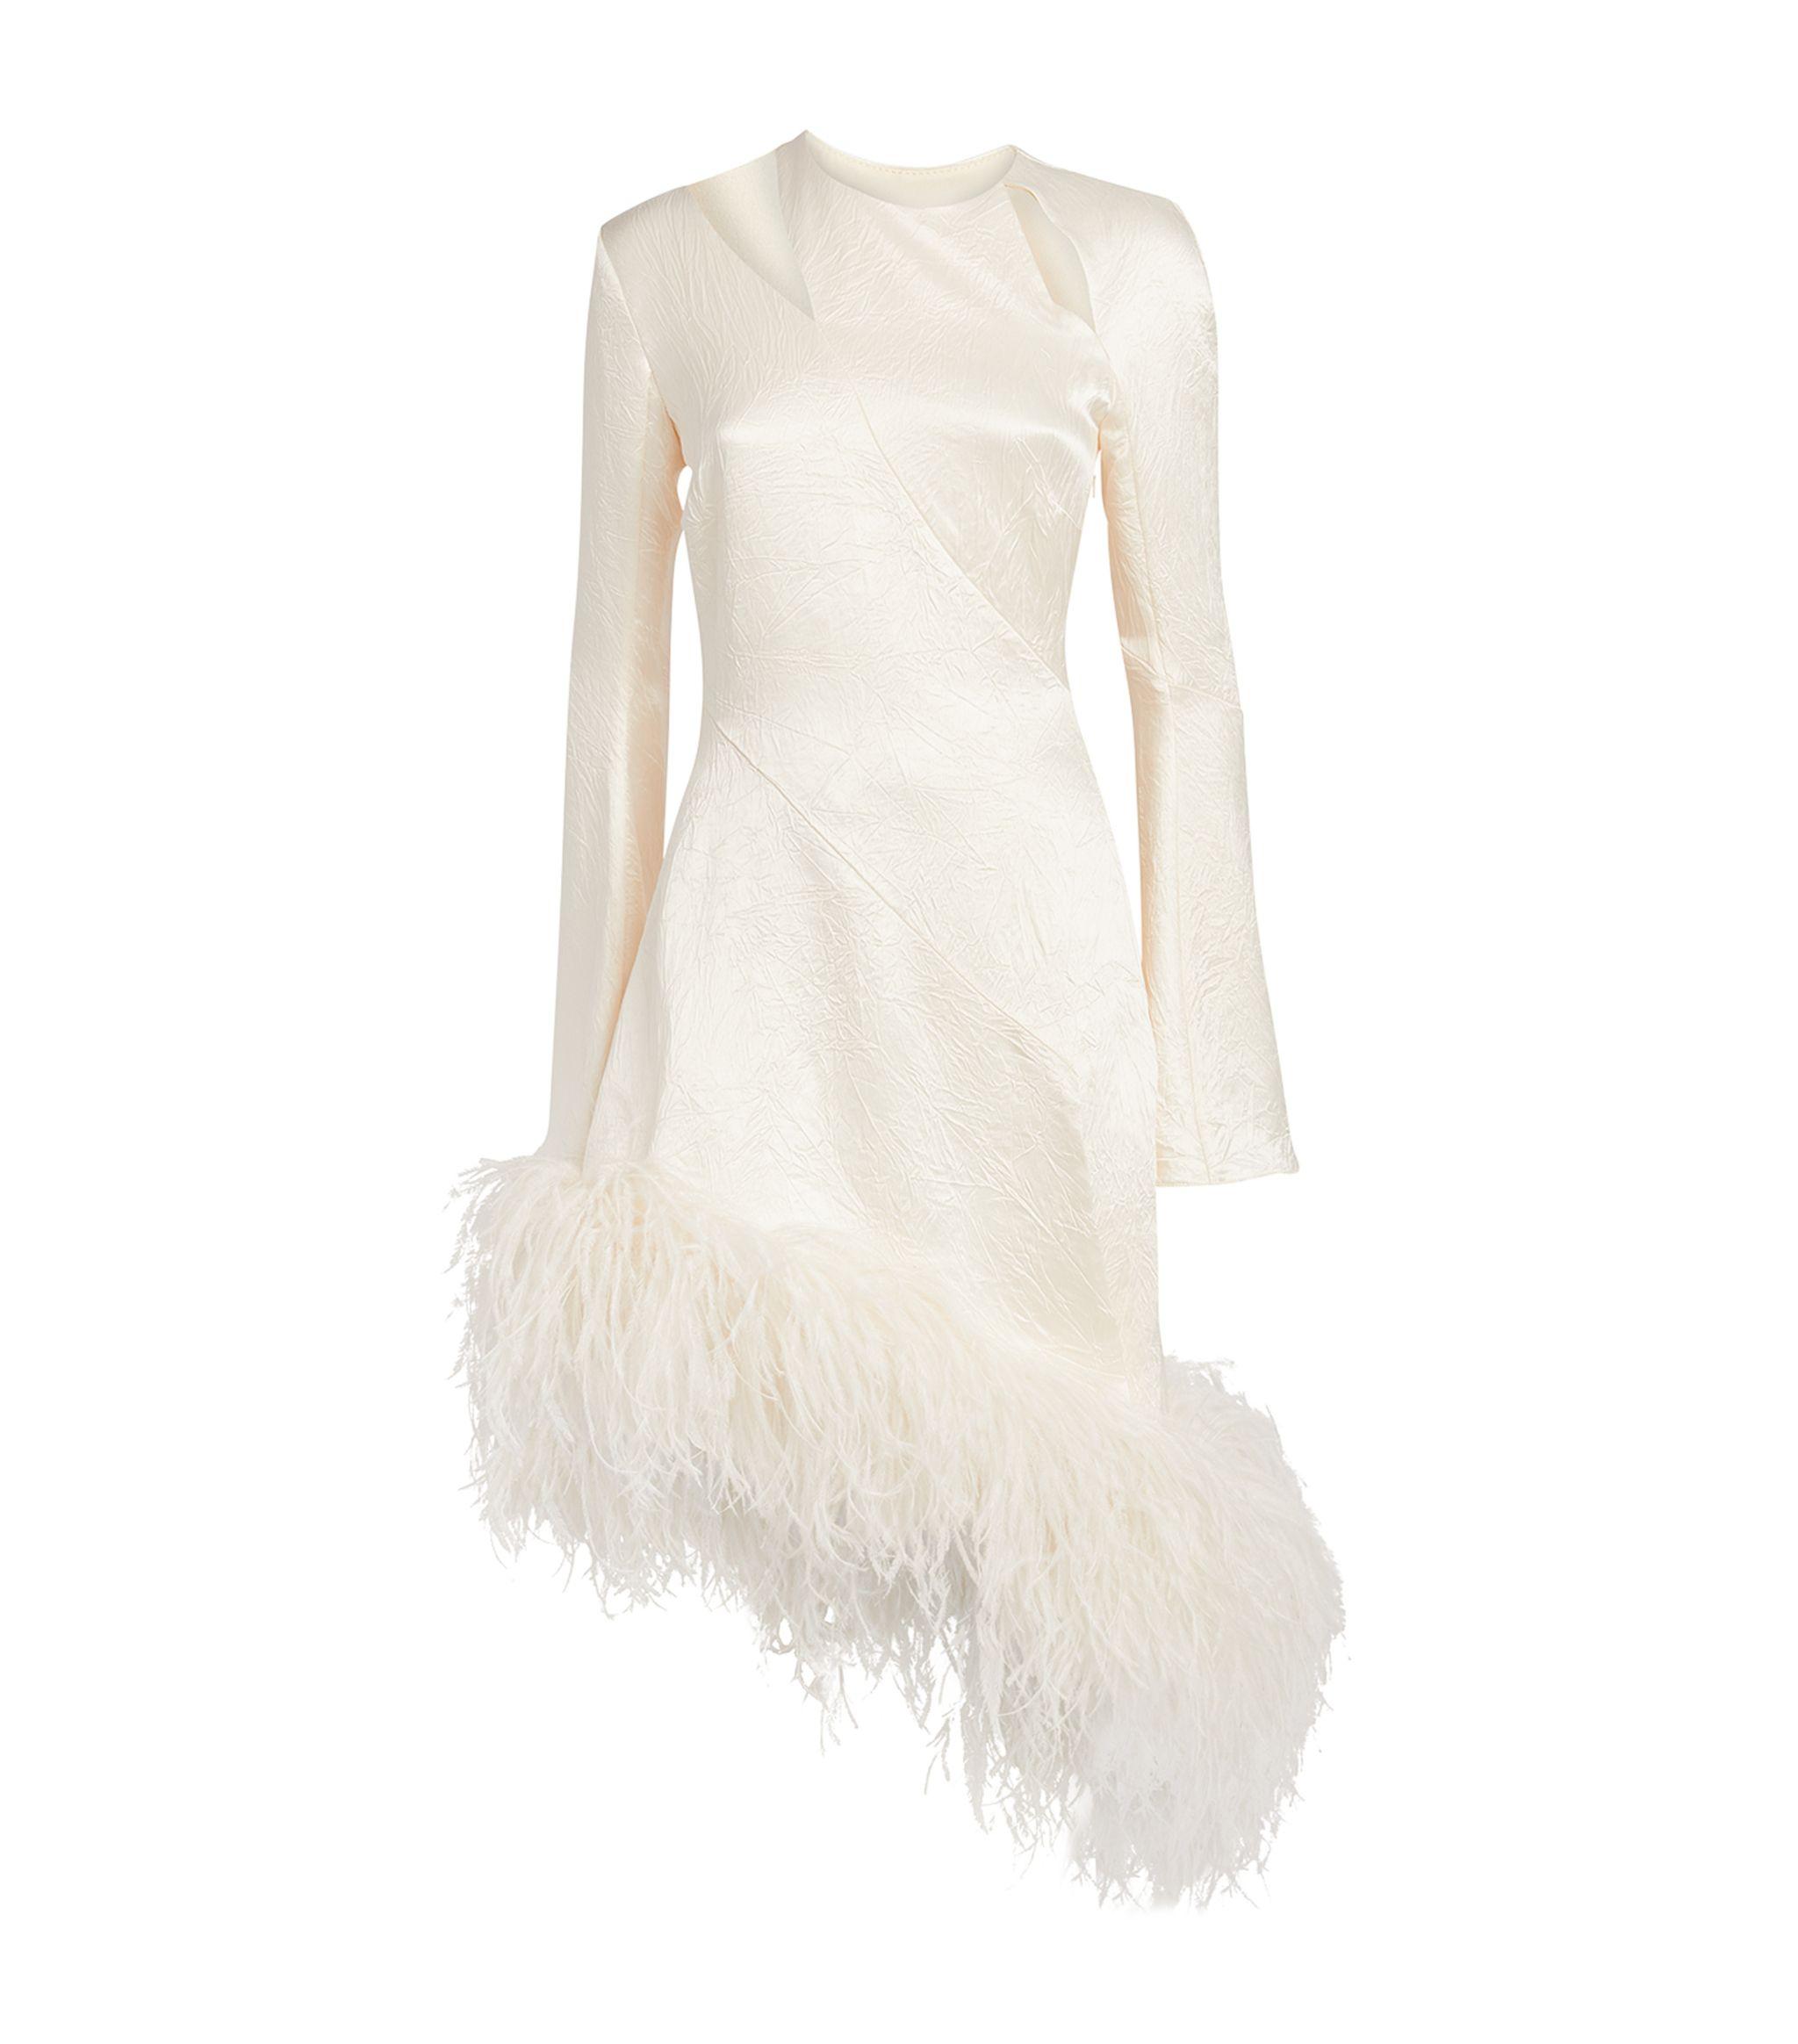 16Arlington Synthetic Ursinia Feather-trim Dress in White - Lyst